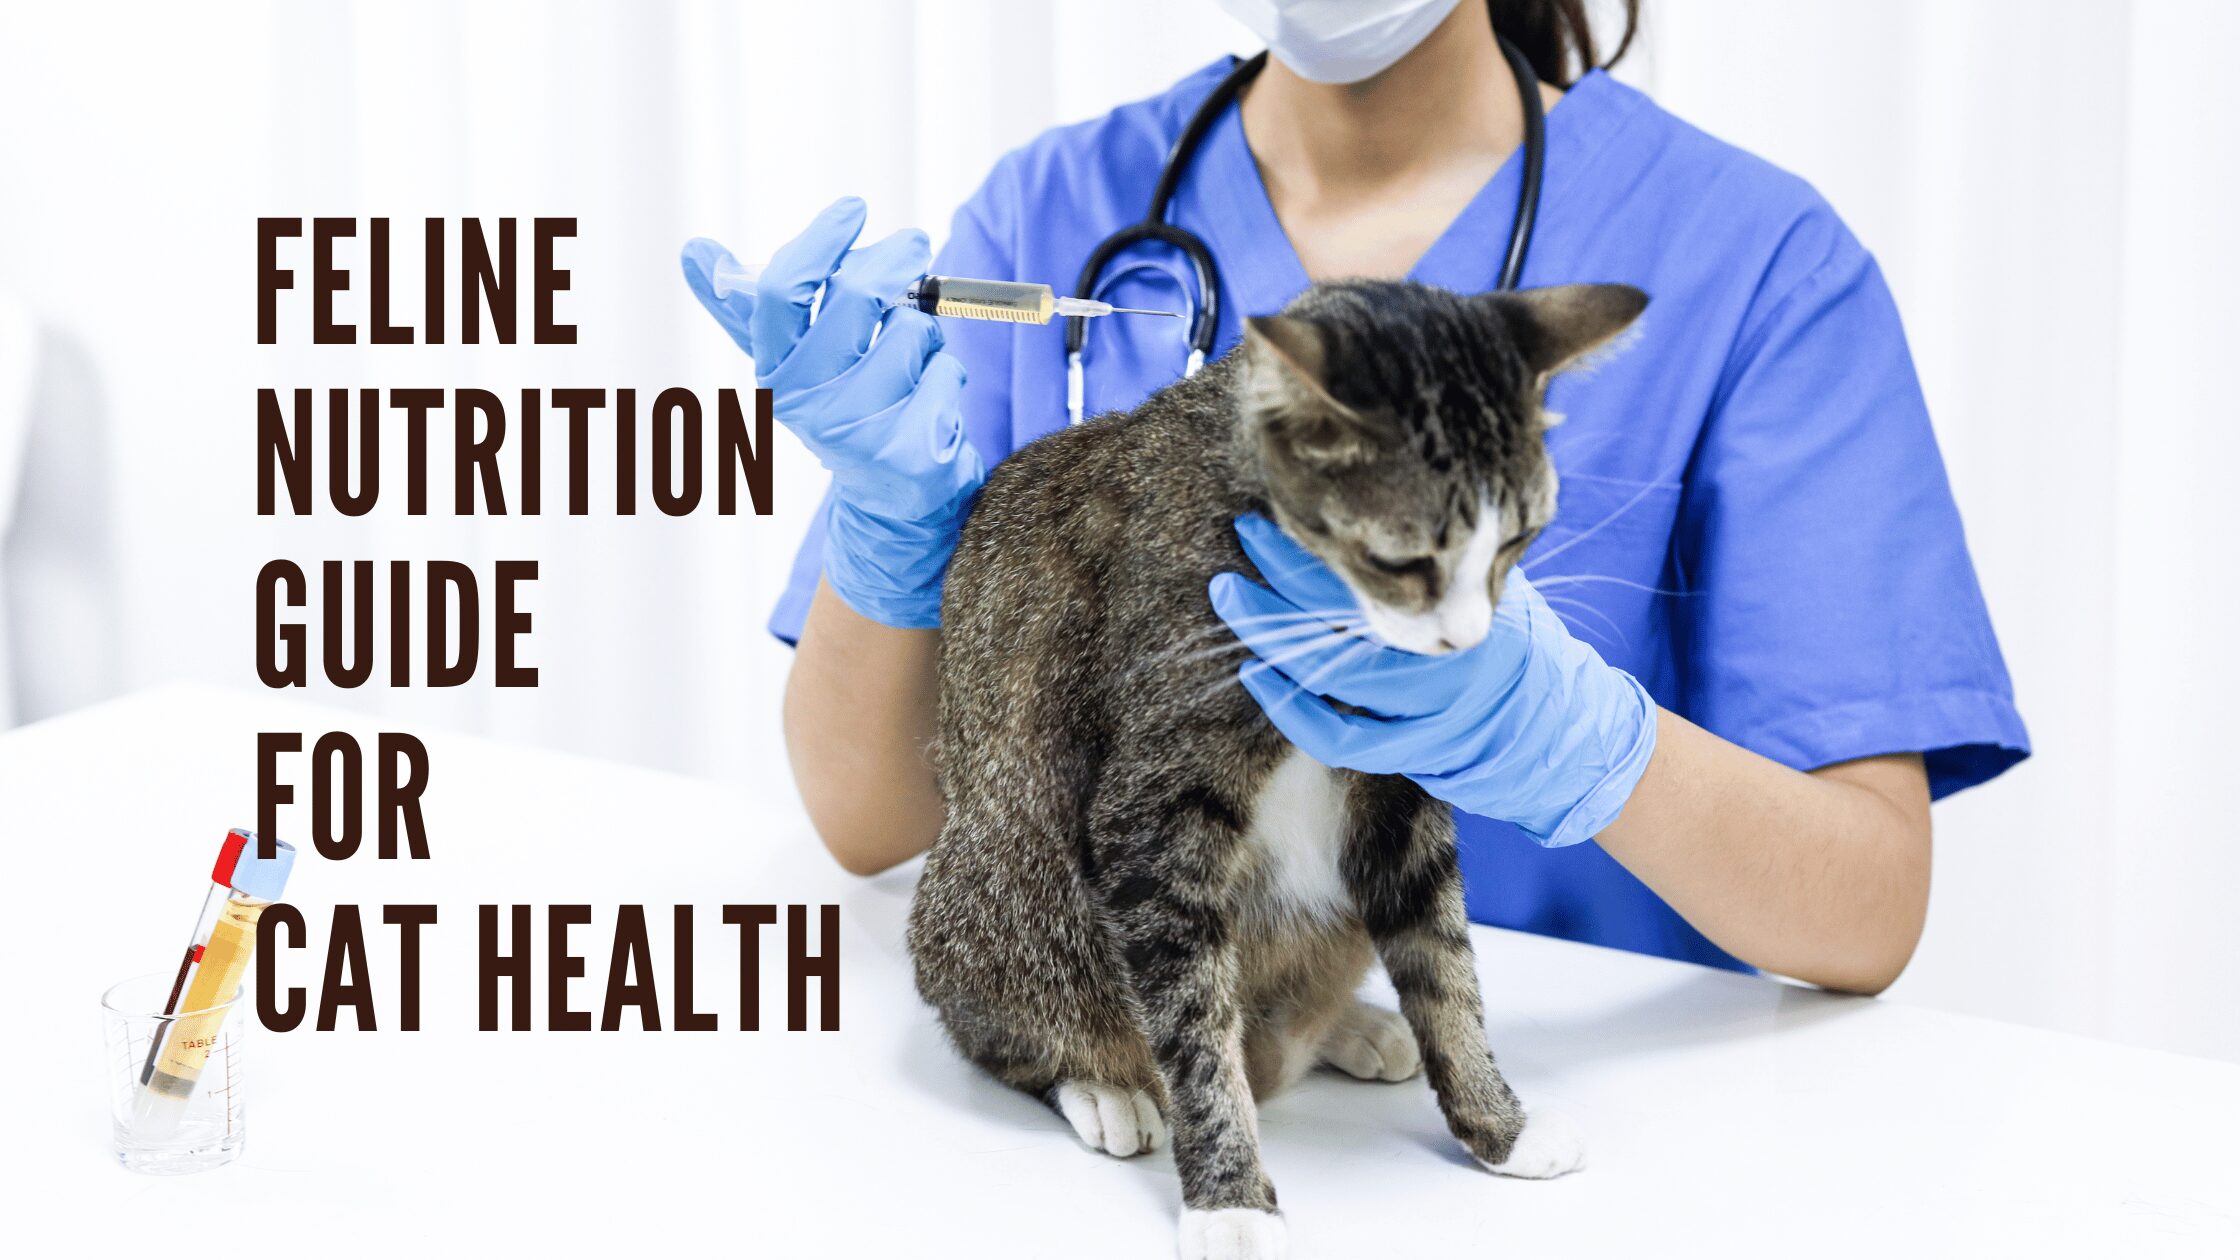 Feline Nutrition Guide for Cat Health